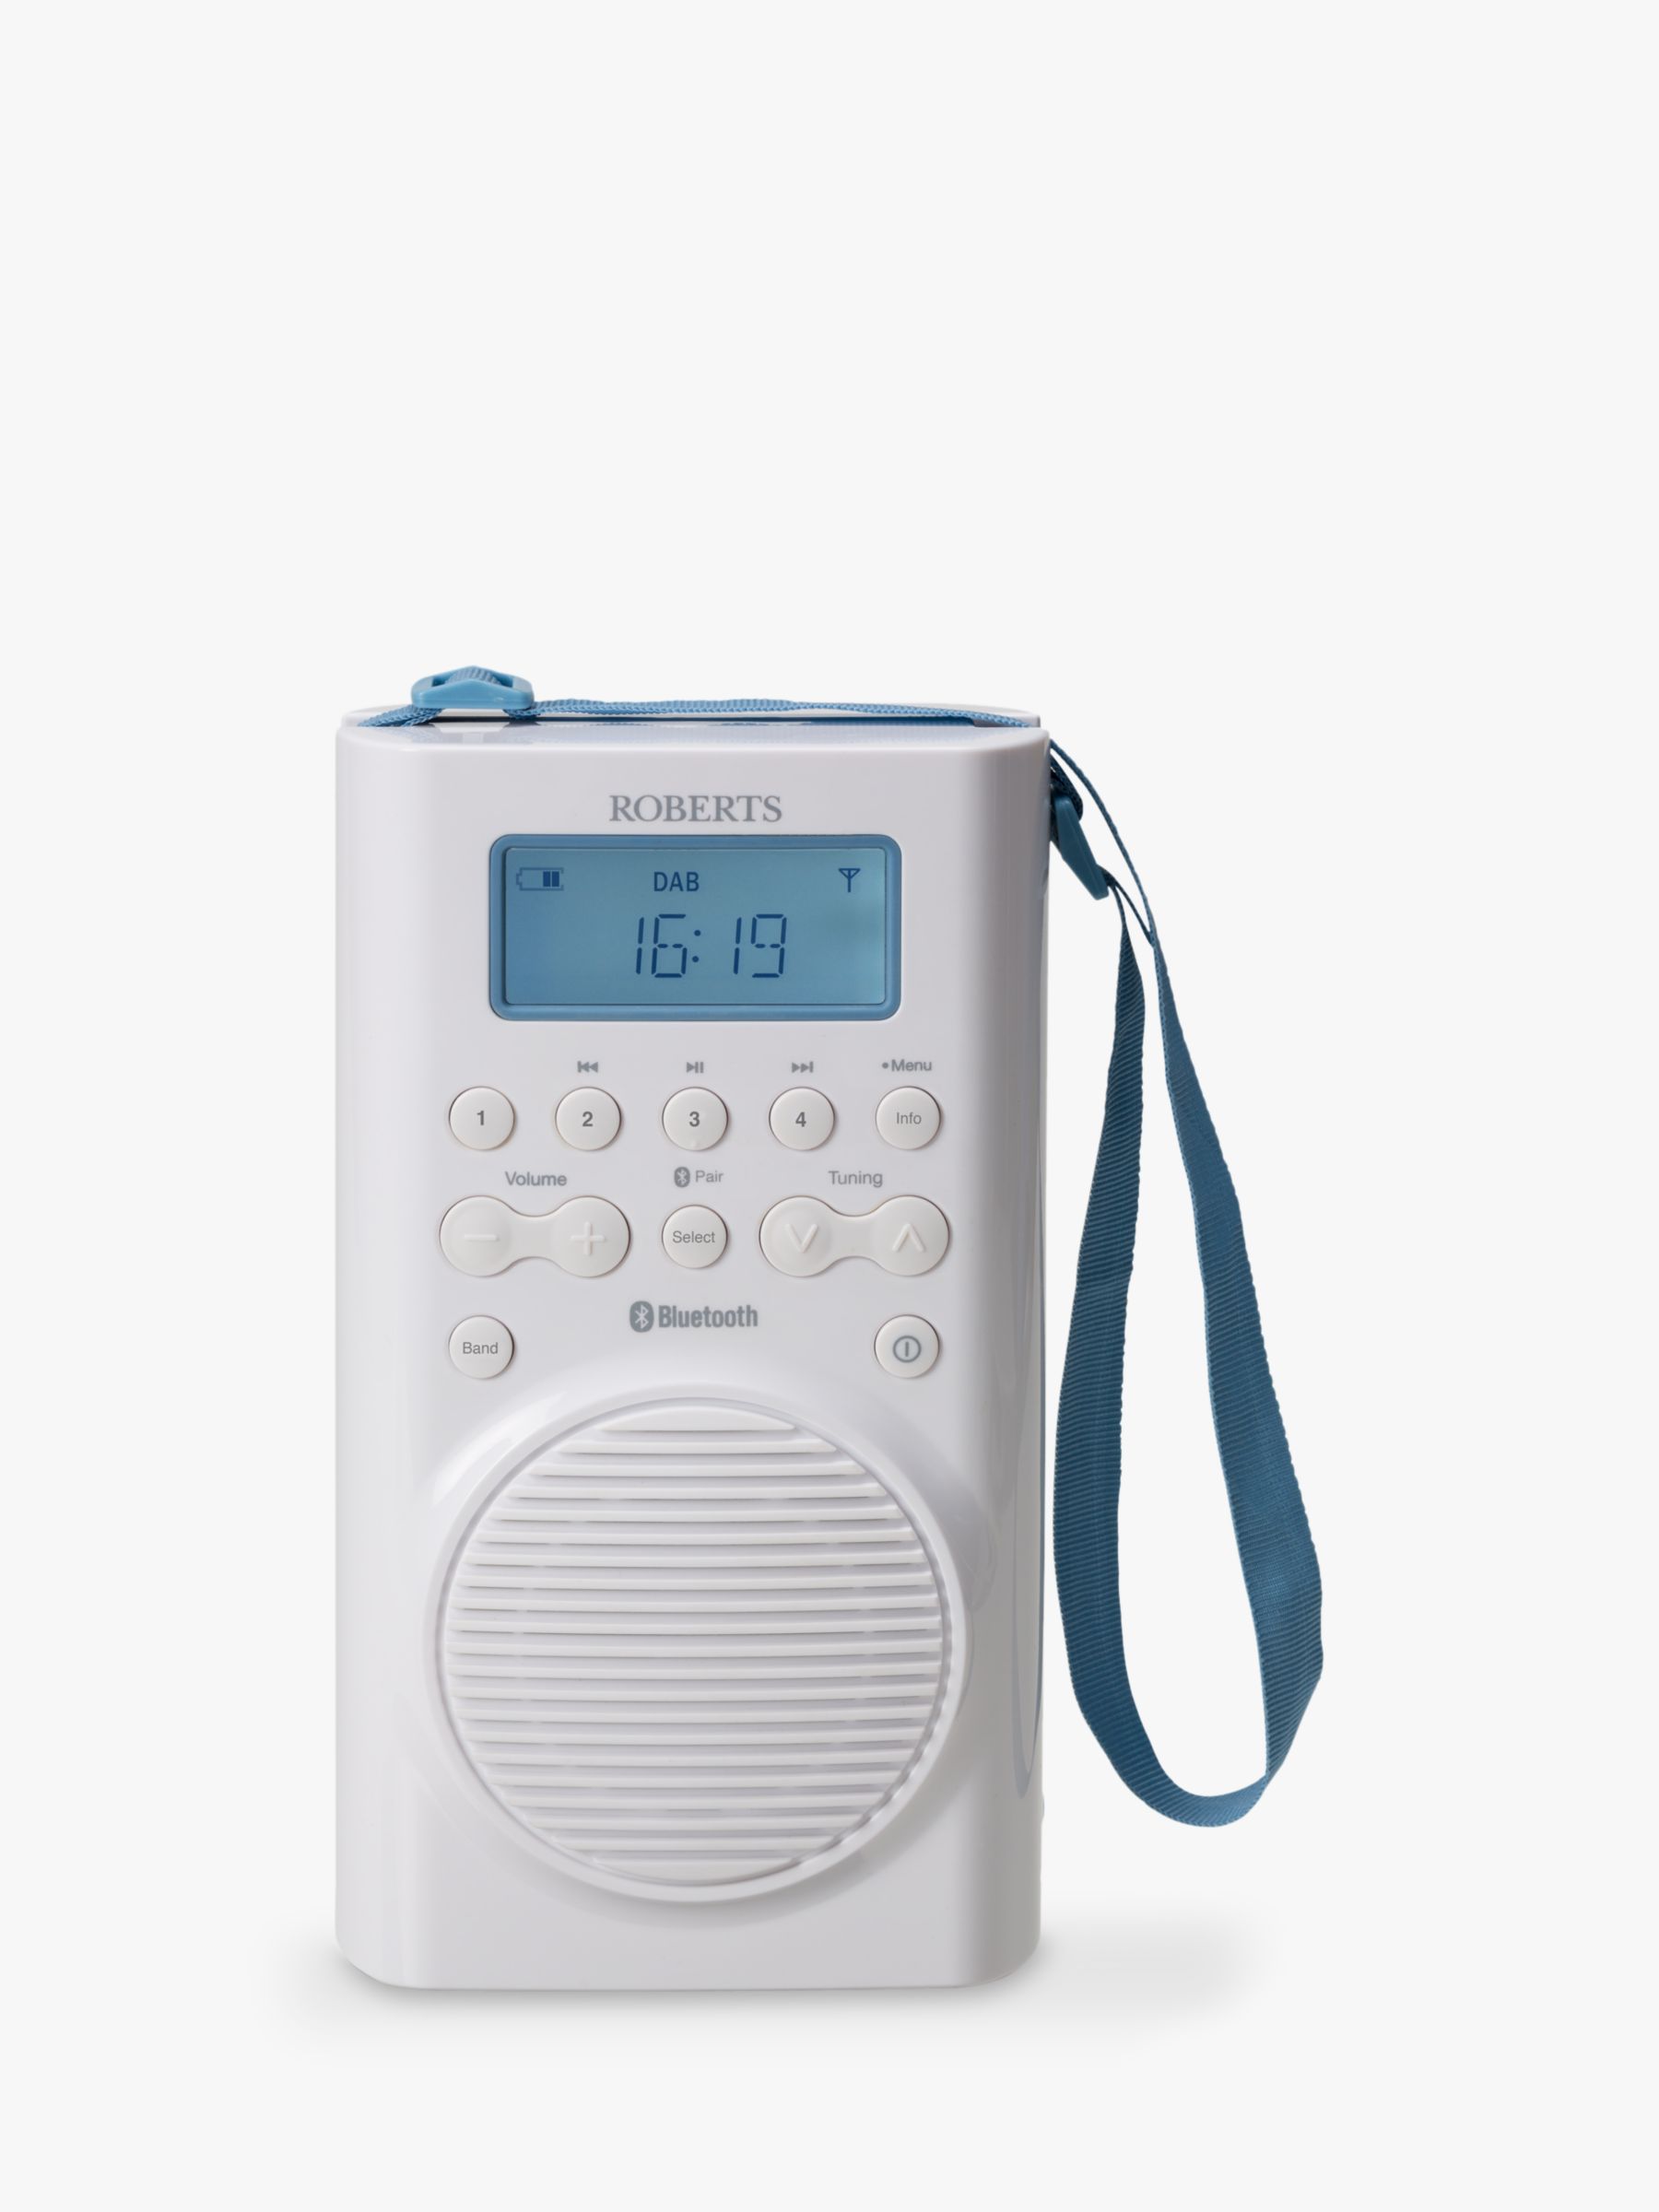 ROBERTS Splash Mini DAB/DAB+/FM Bluetooth Shower Radio, White